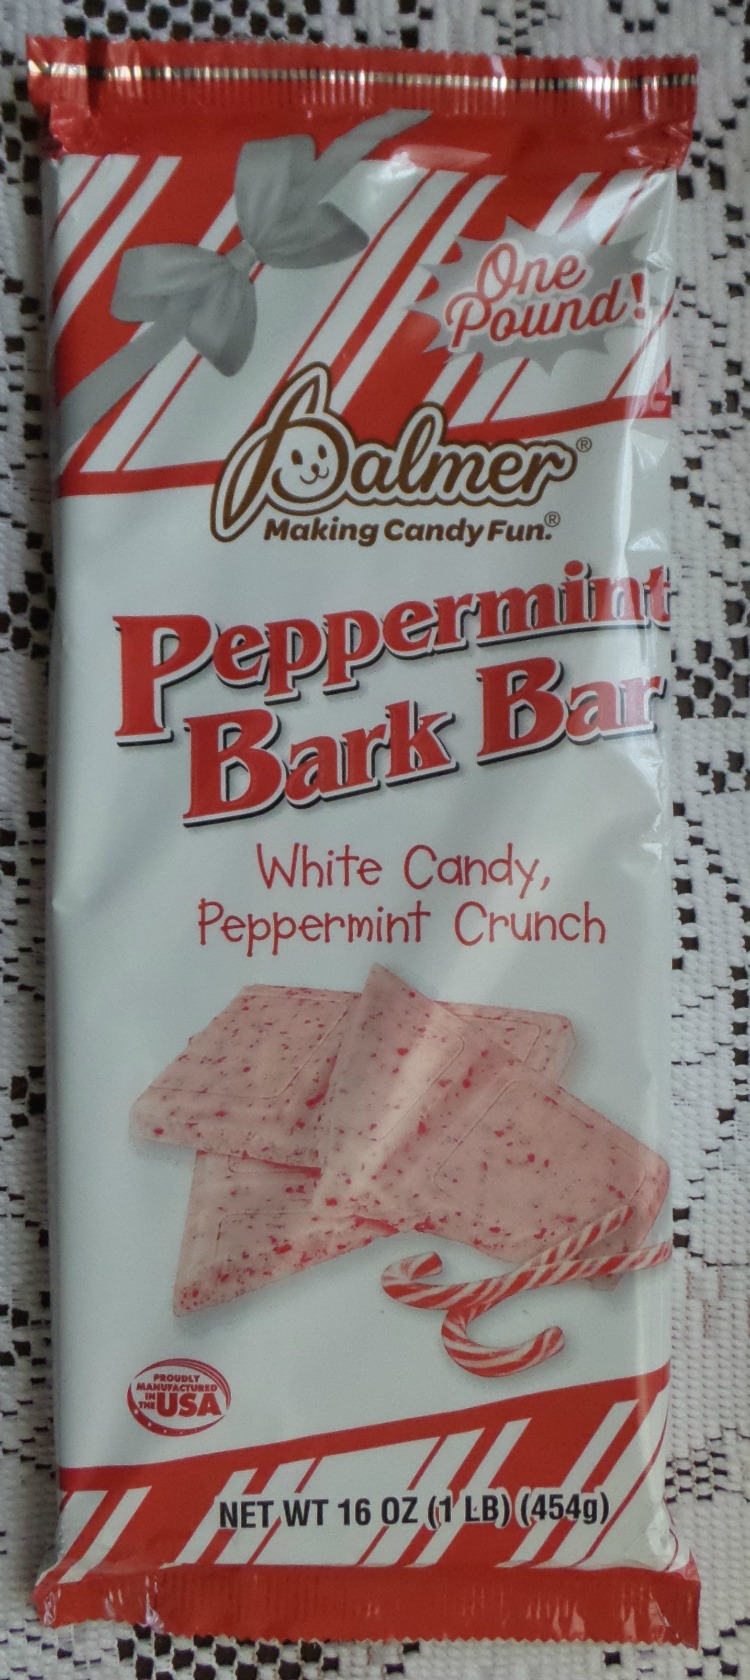 palmer-peppermint-bark-bar